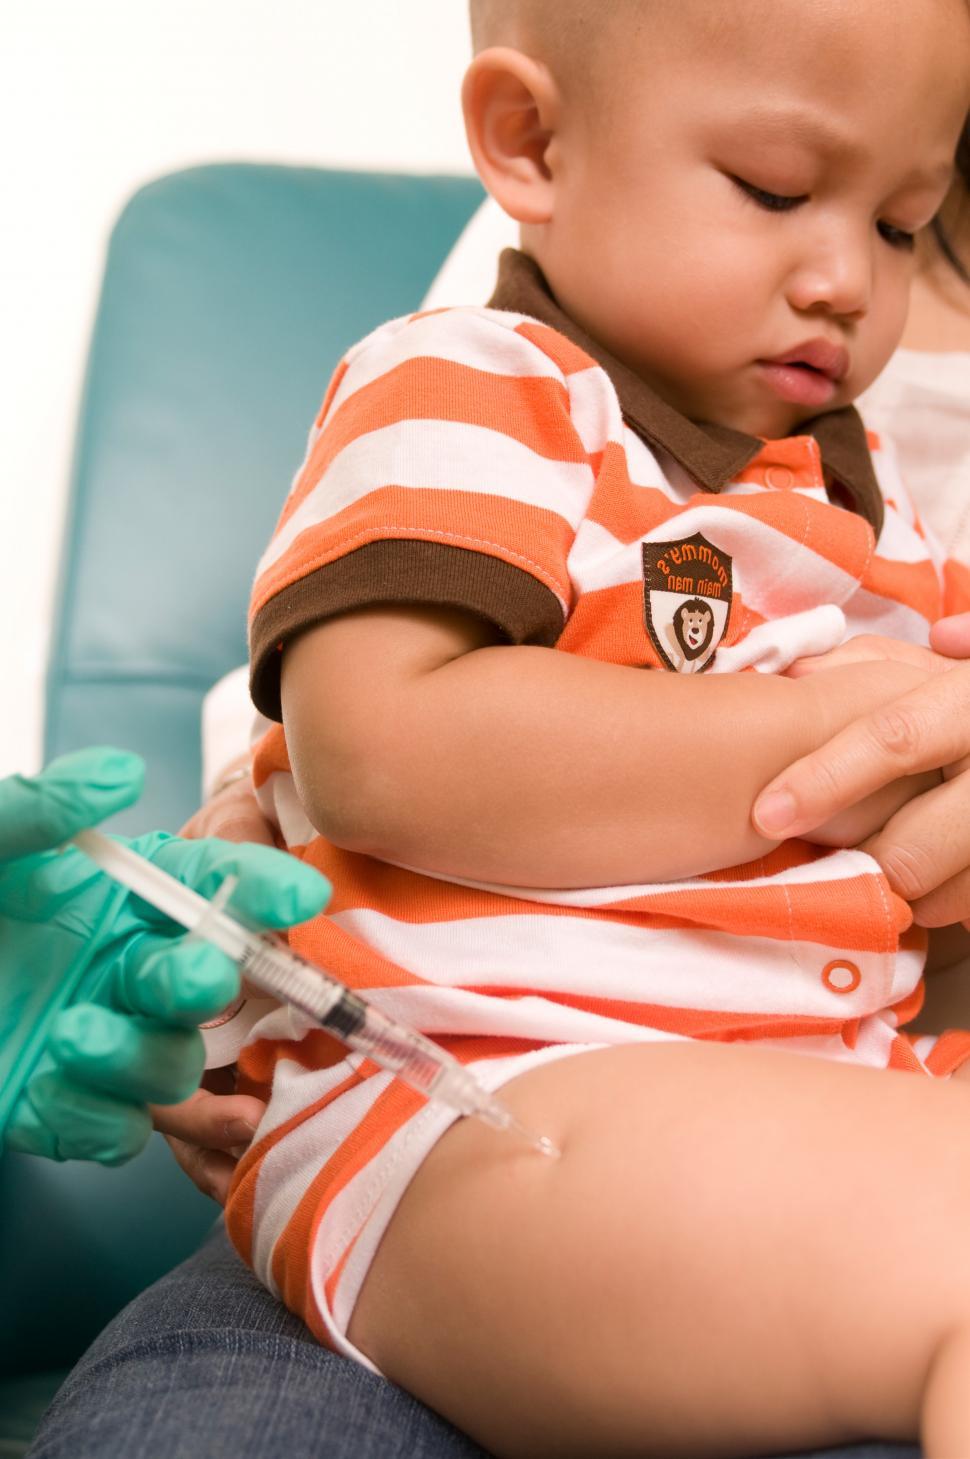 Free Image of Infant Receiving an Immunization Shot 